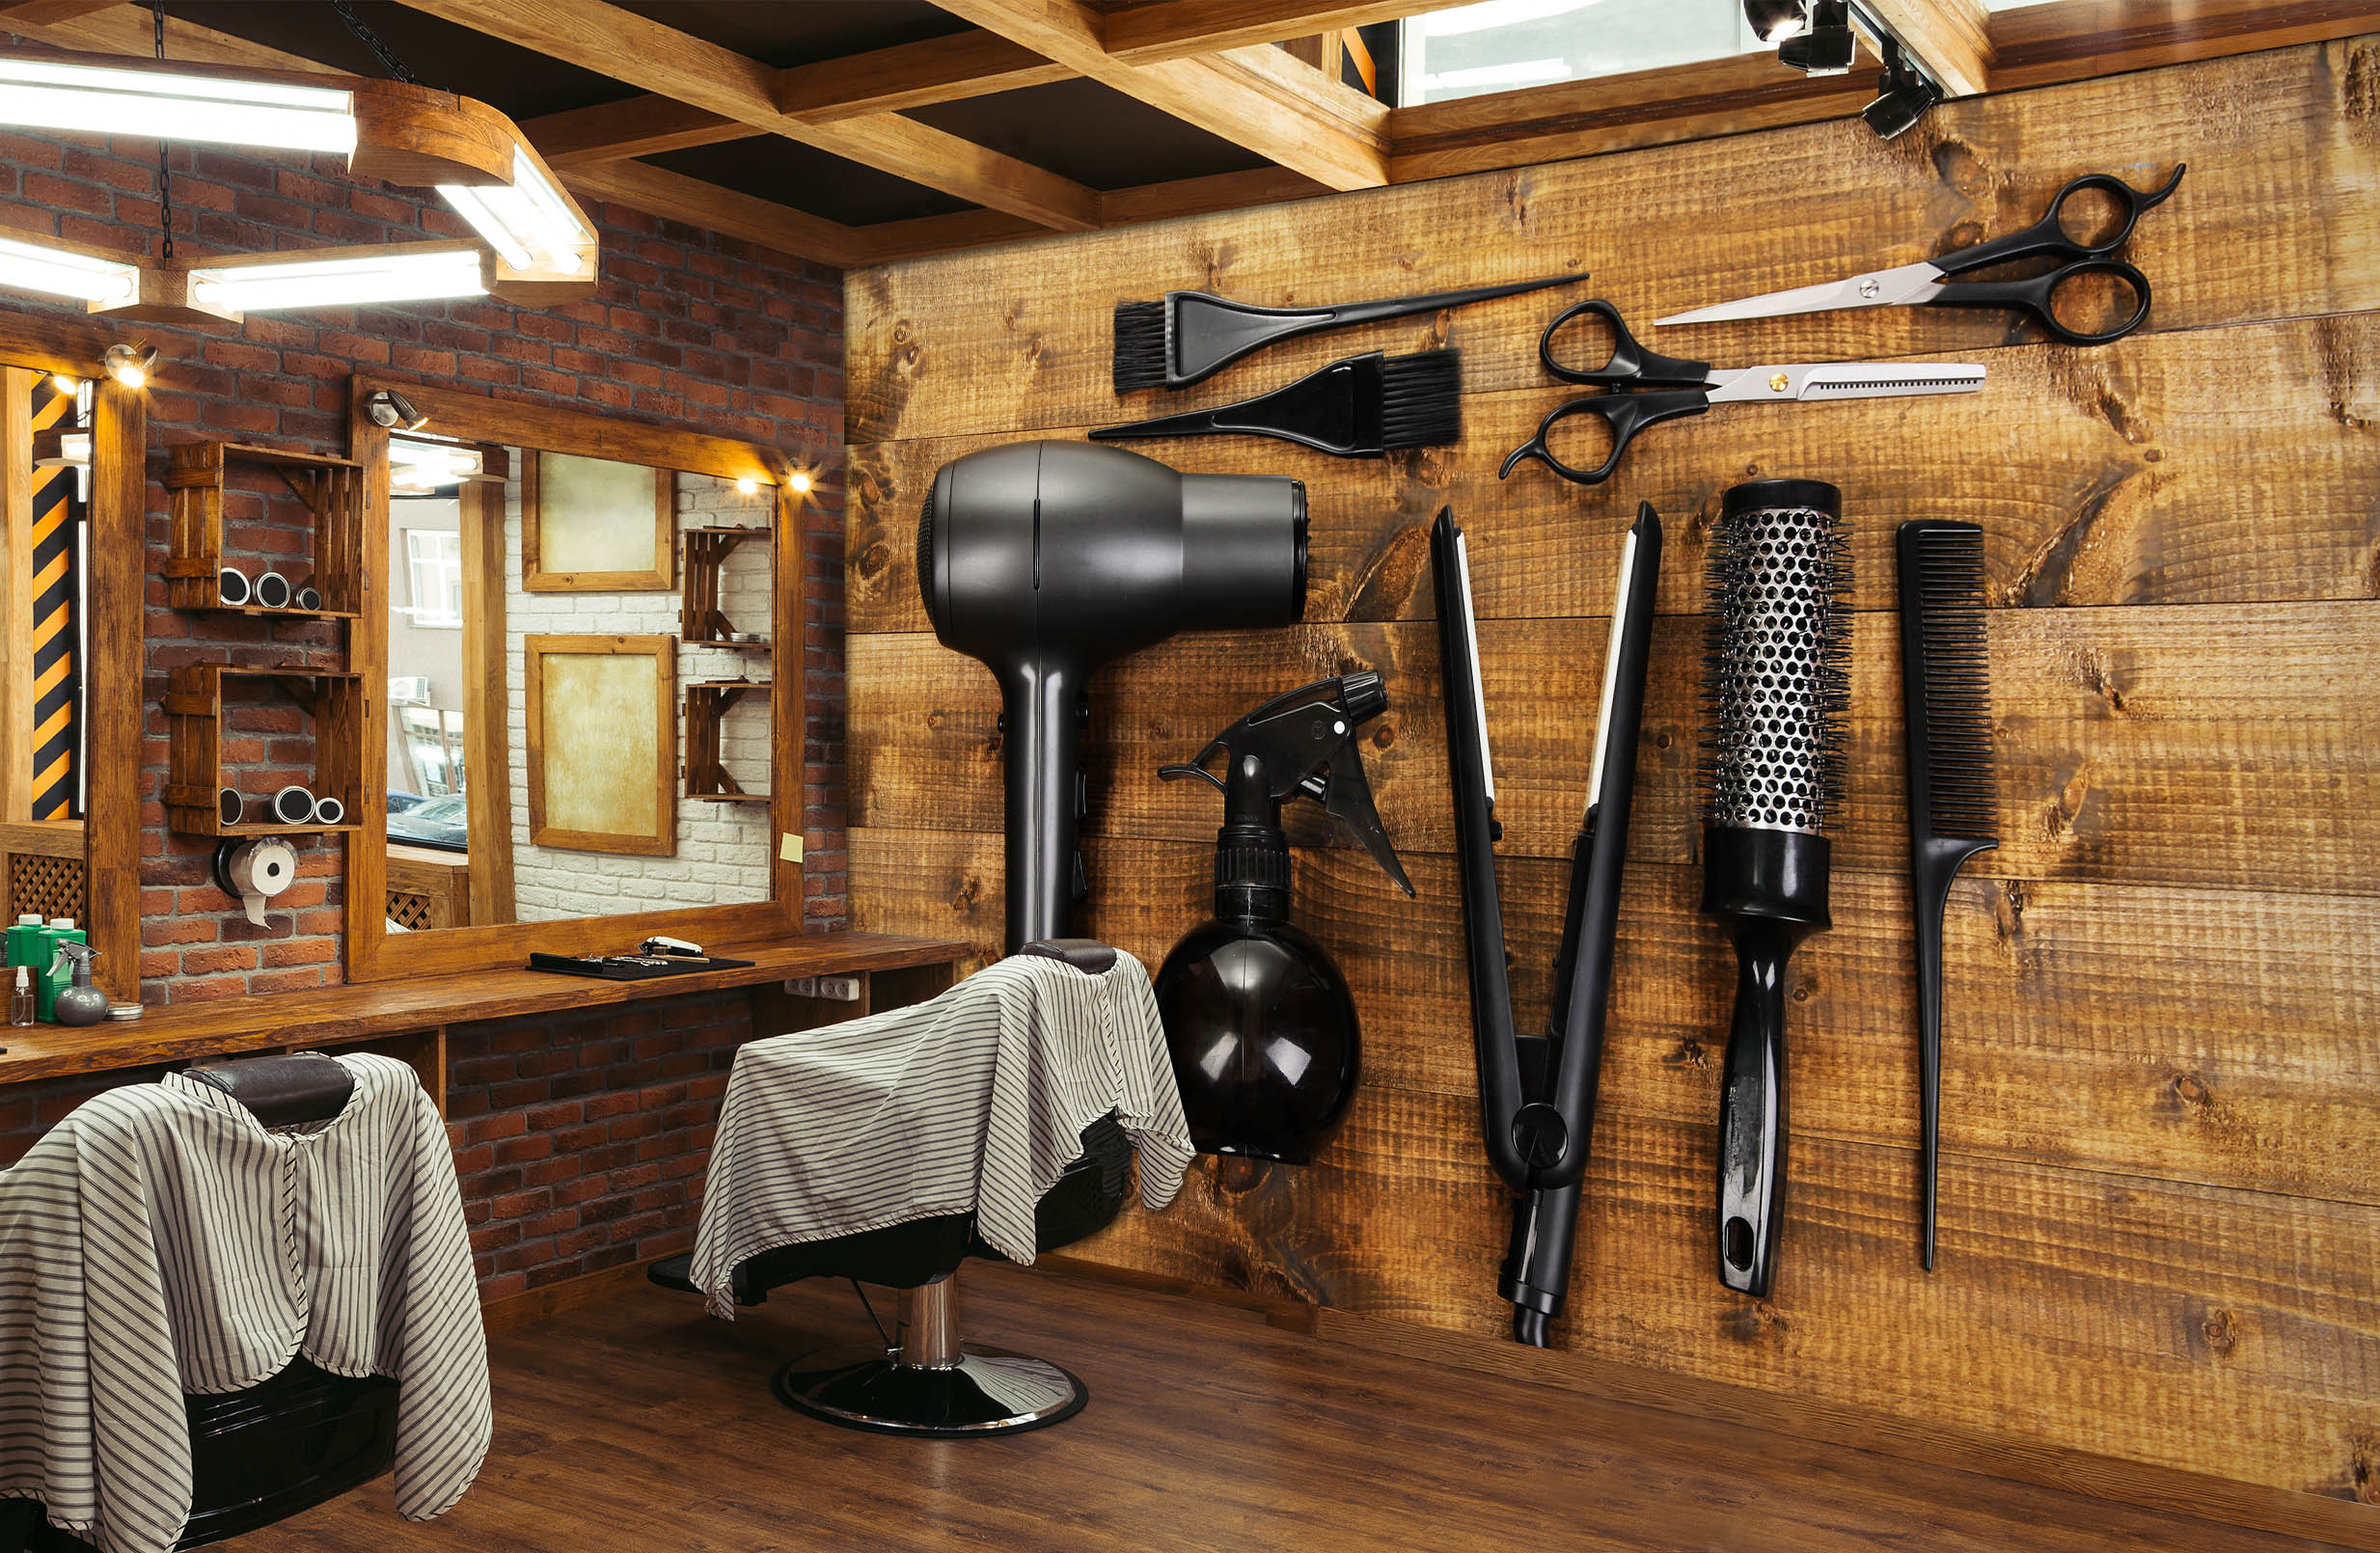 3D Hair Dryer Comb Splint 115131 Barber Shop Wall Murals